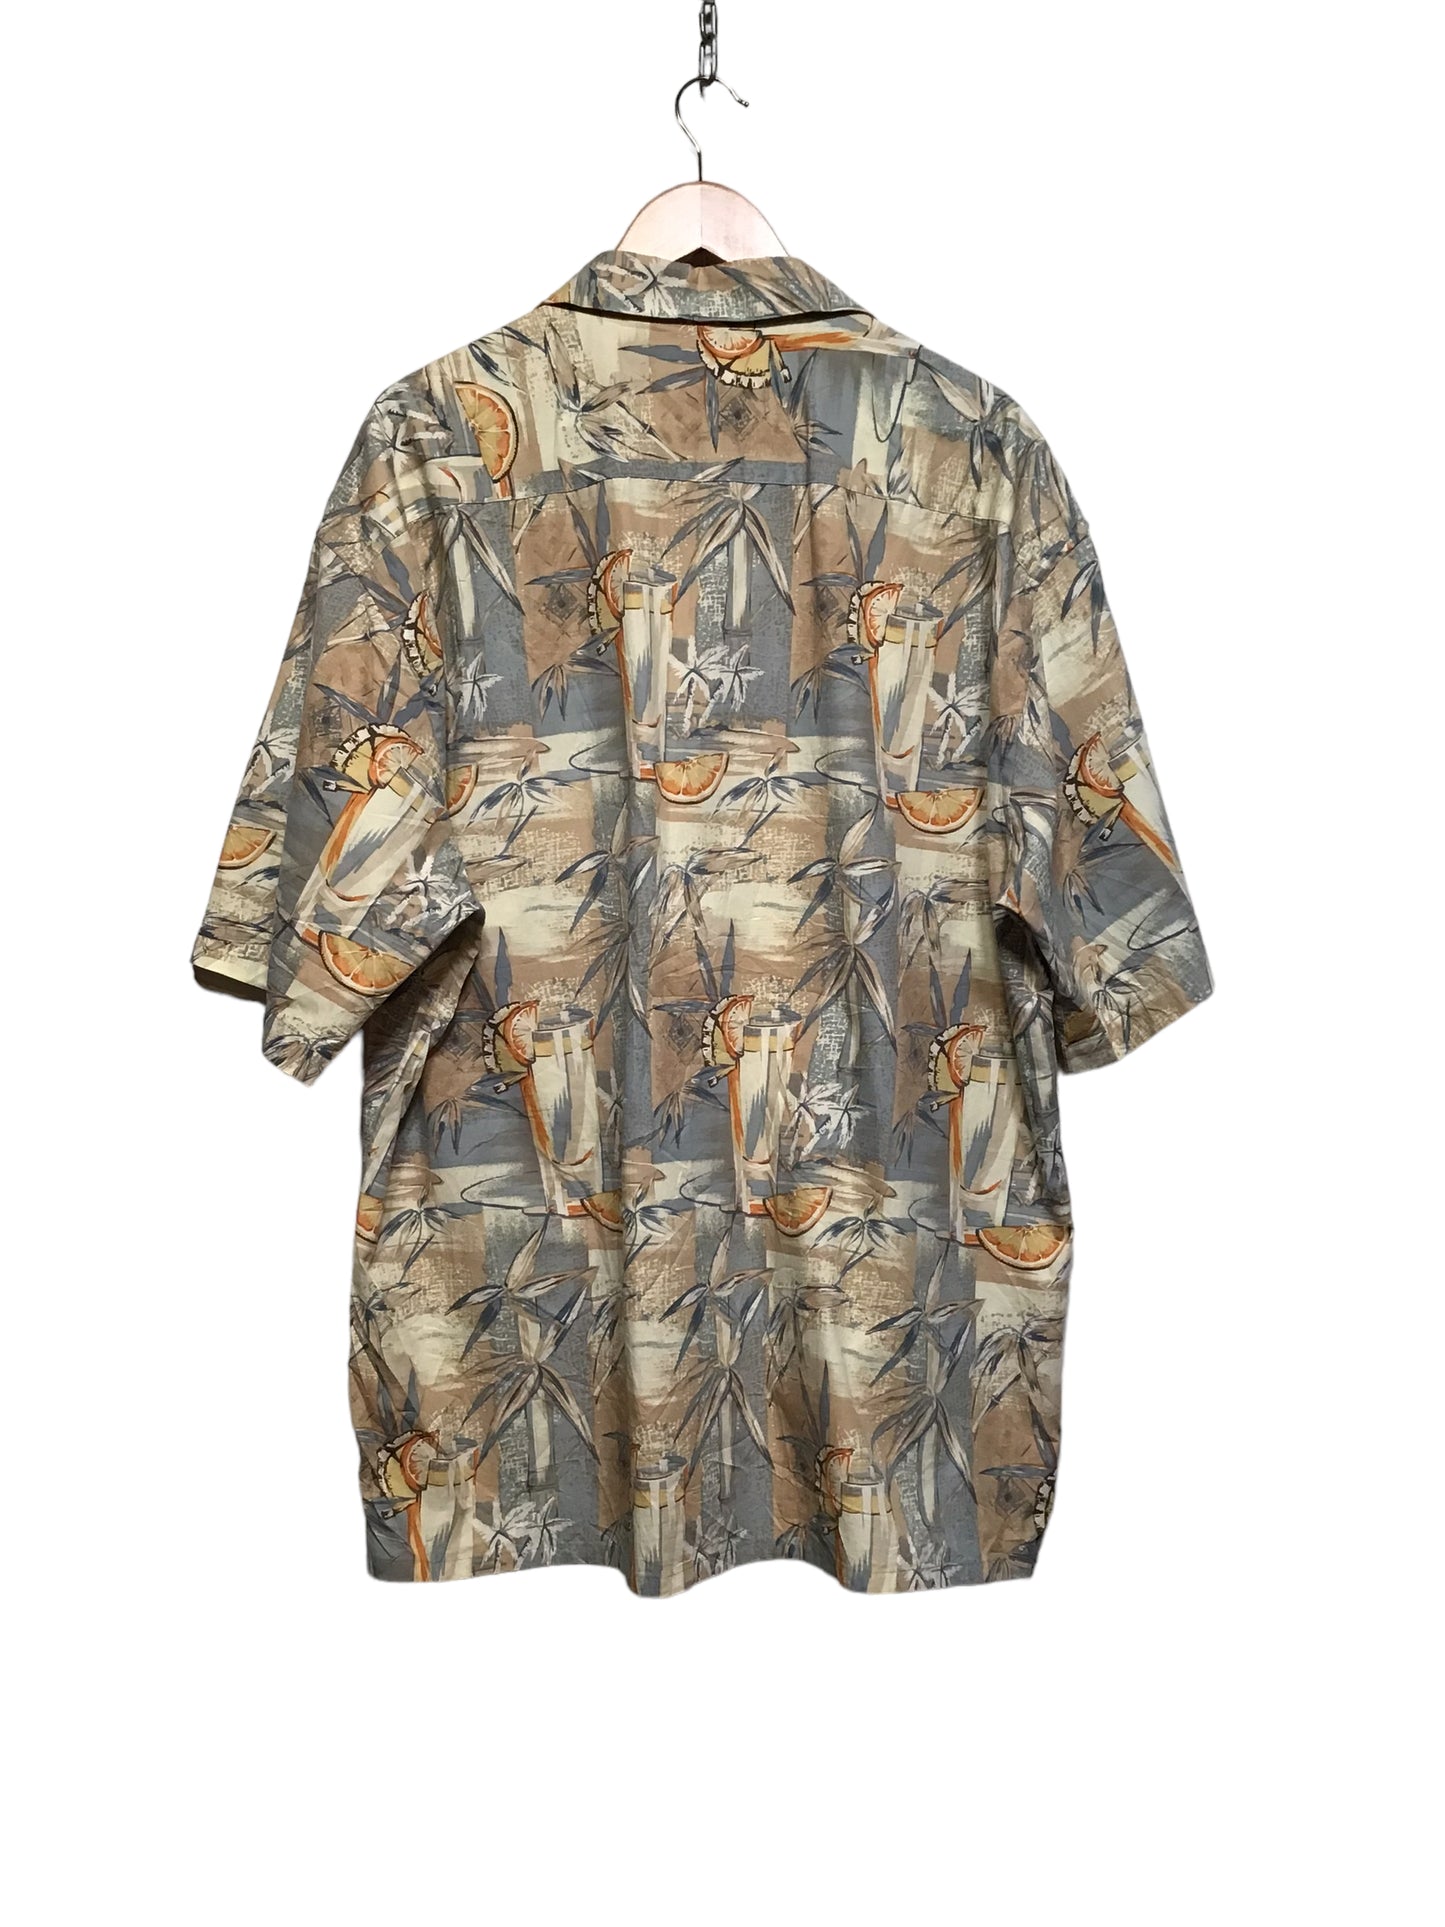 Pierre Cardin Hawaiian Shirt (Size XXL)